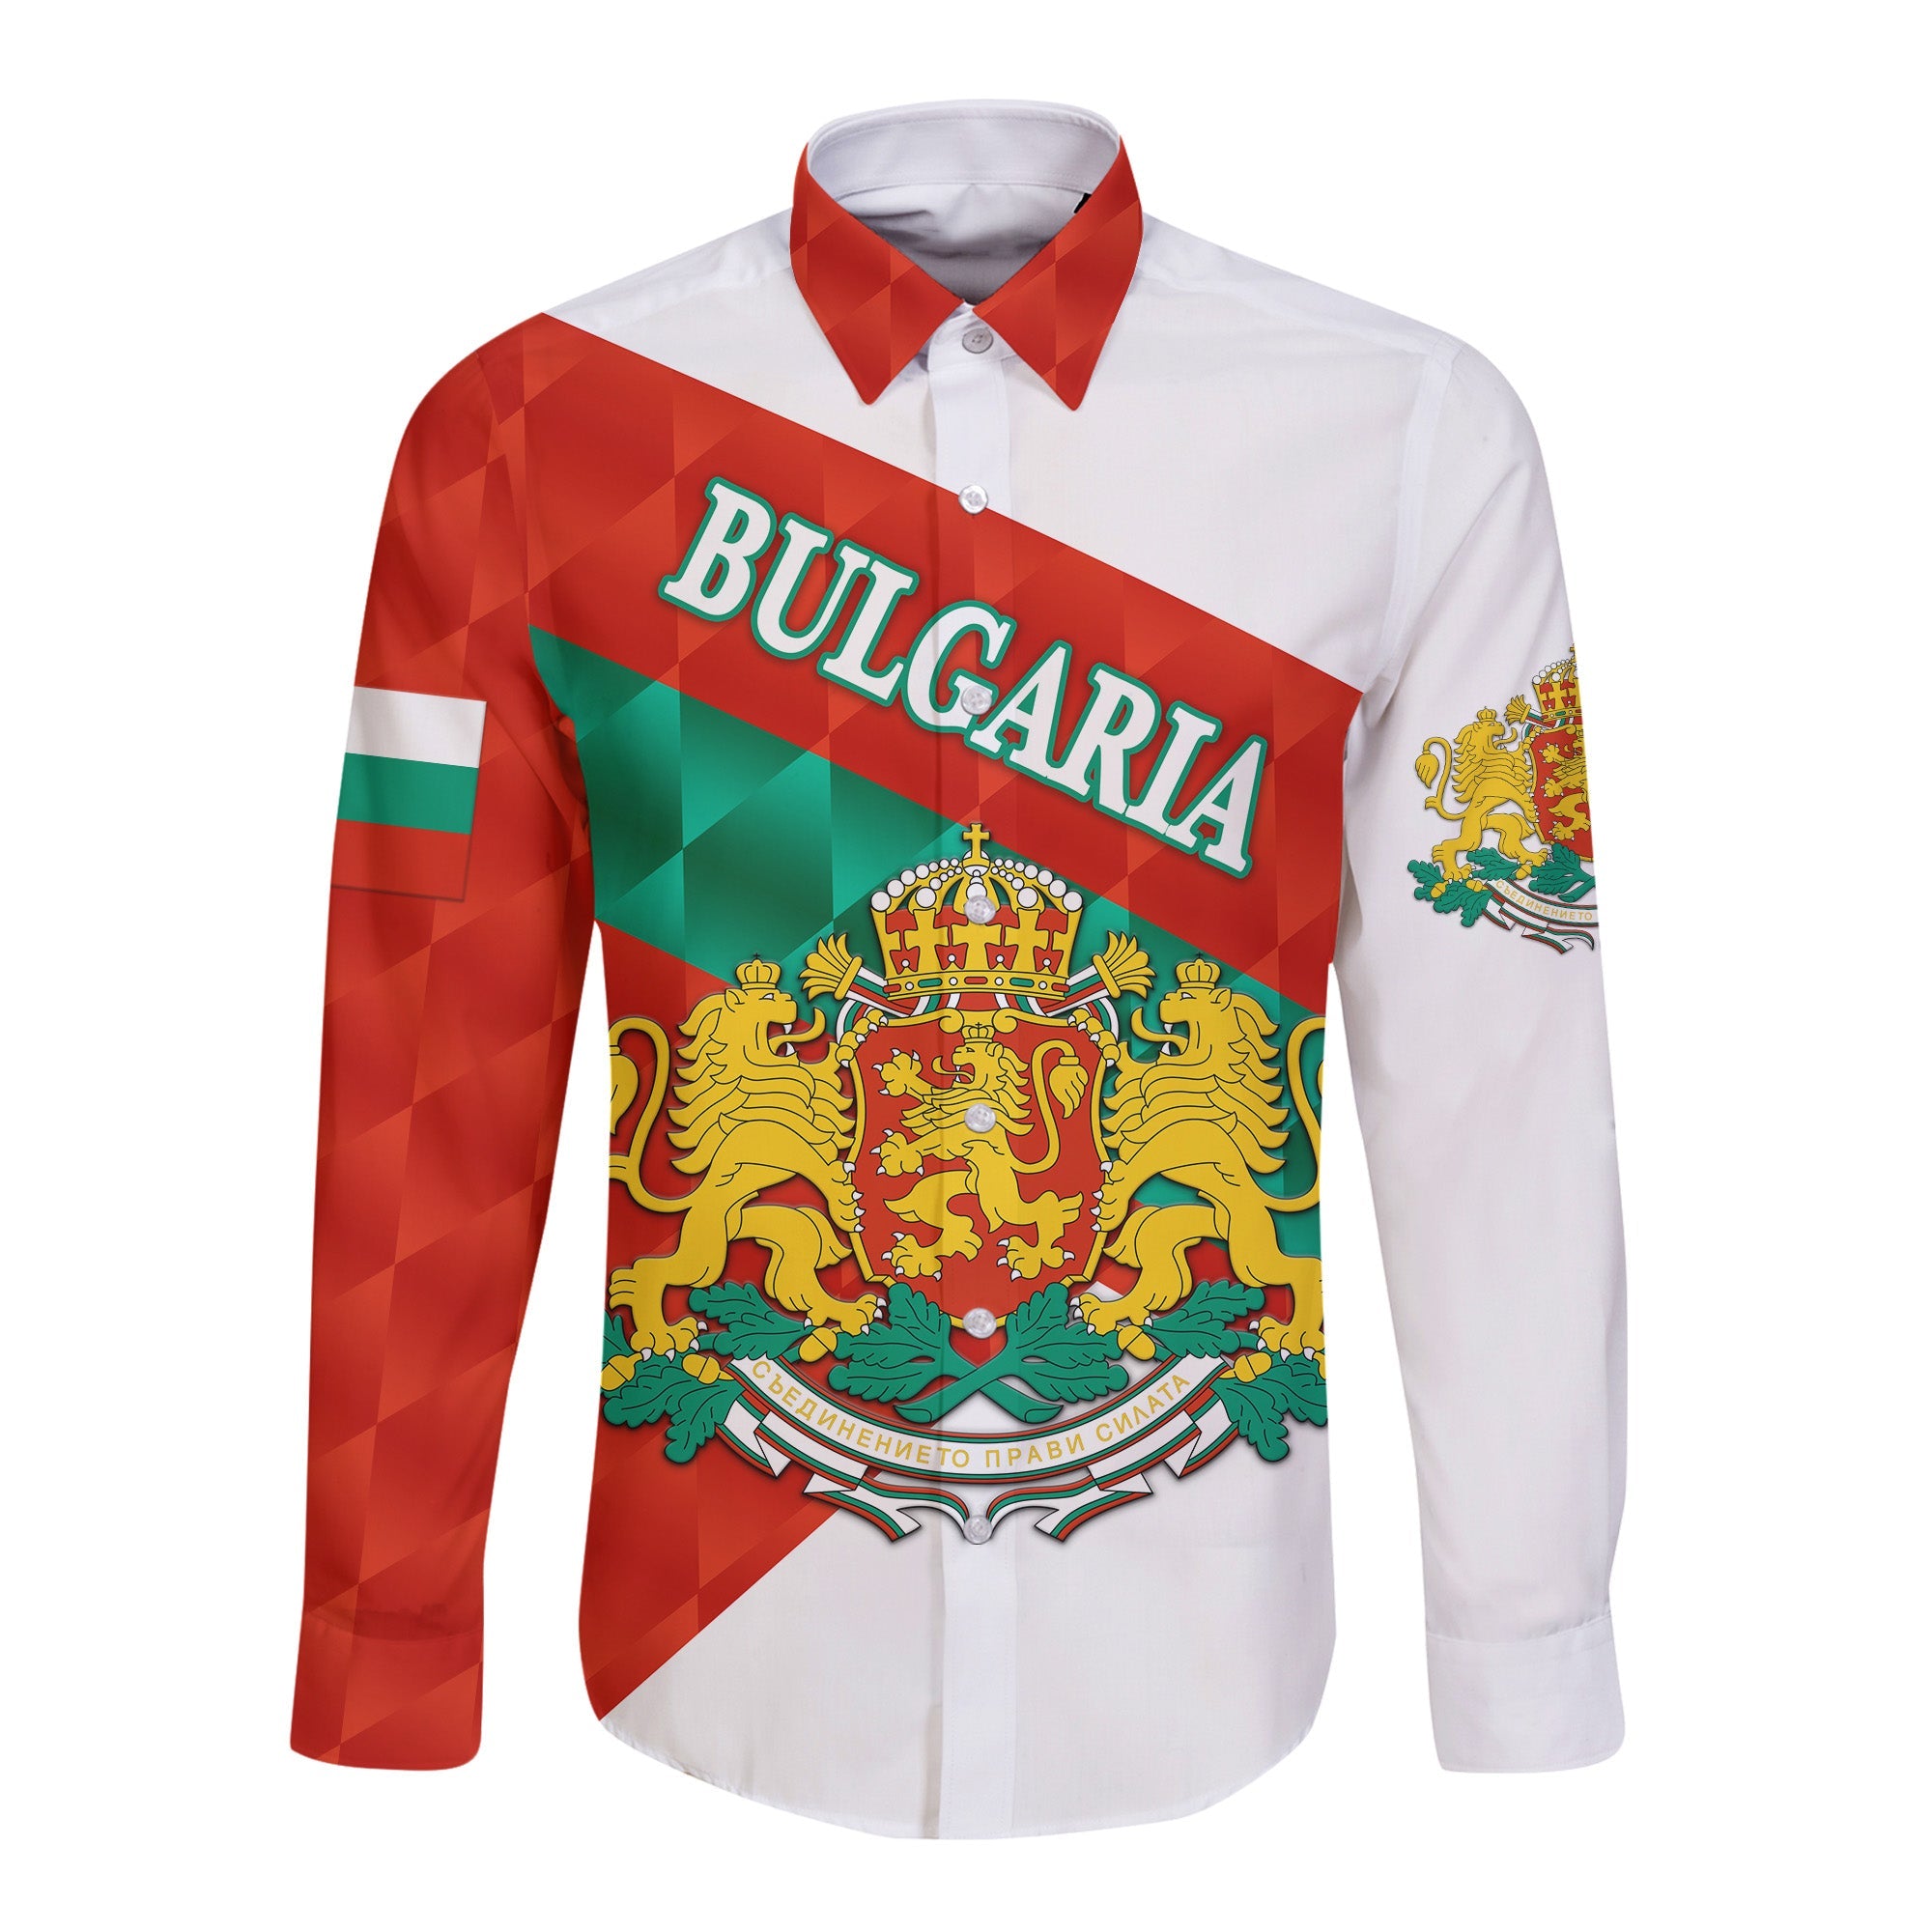 bulgaria-hawaii-long-sleeve-button-shirt-sporty-style